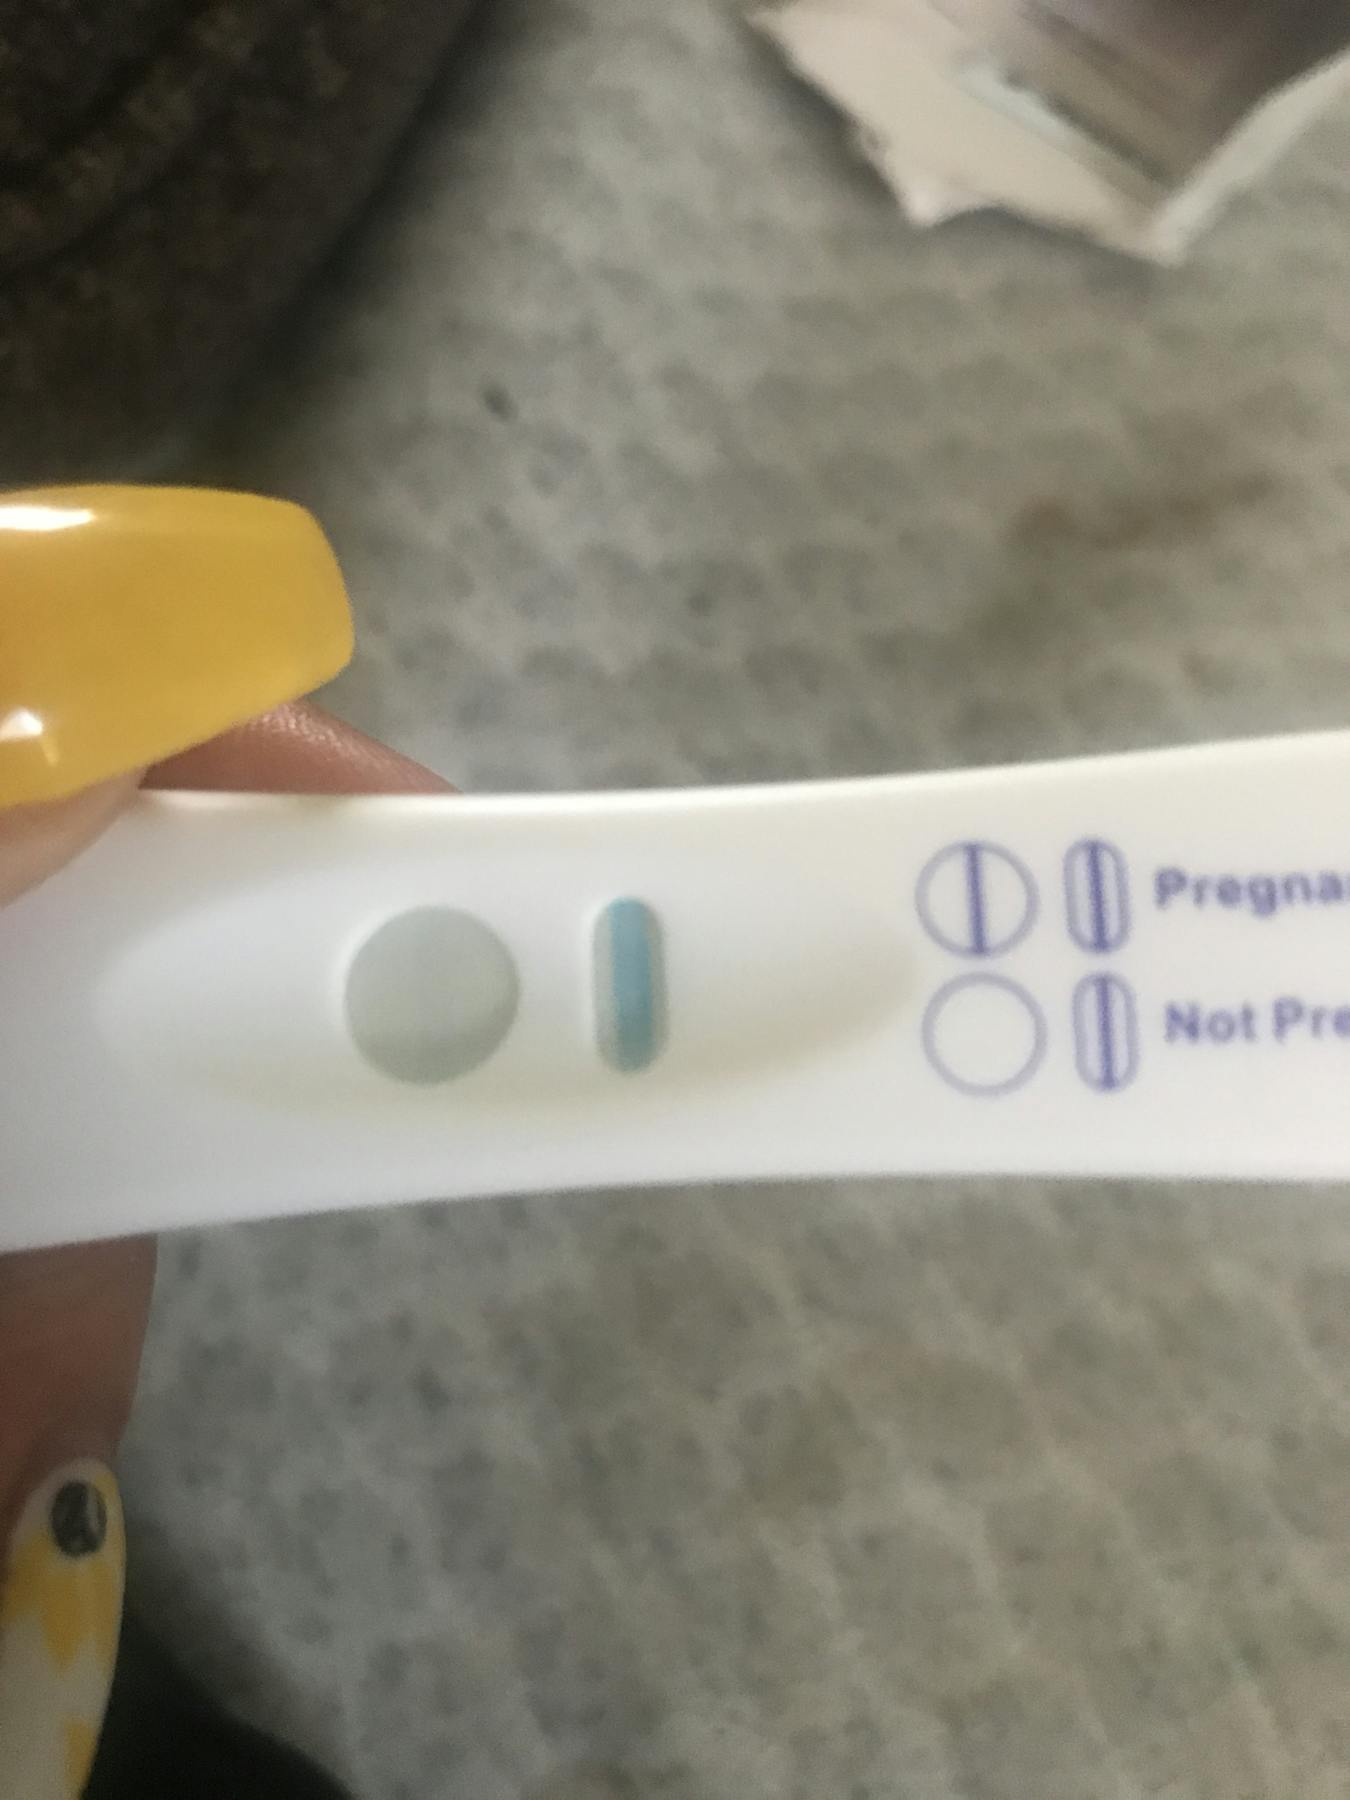 test pregnancy faint positive took negative late days help